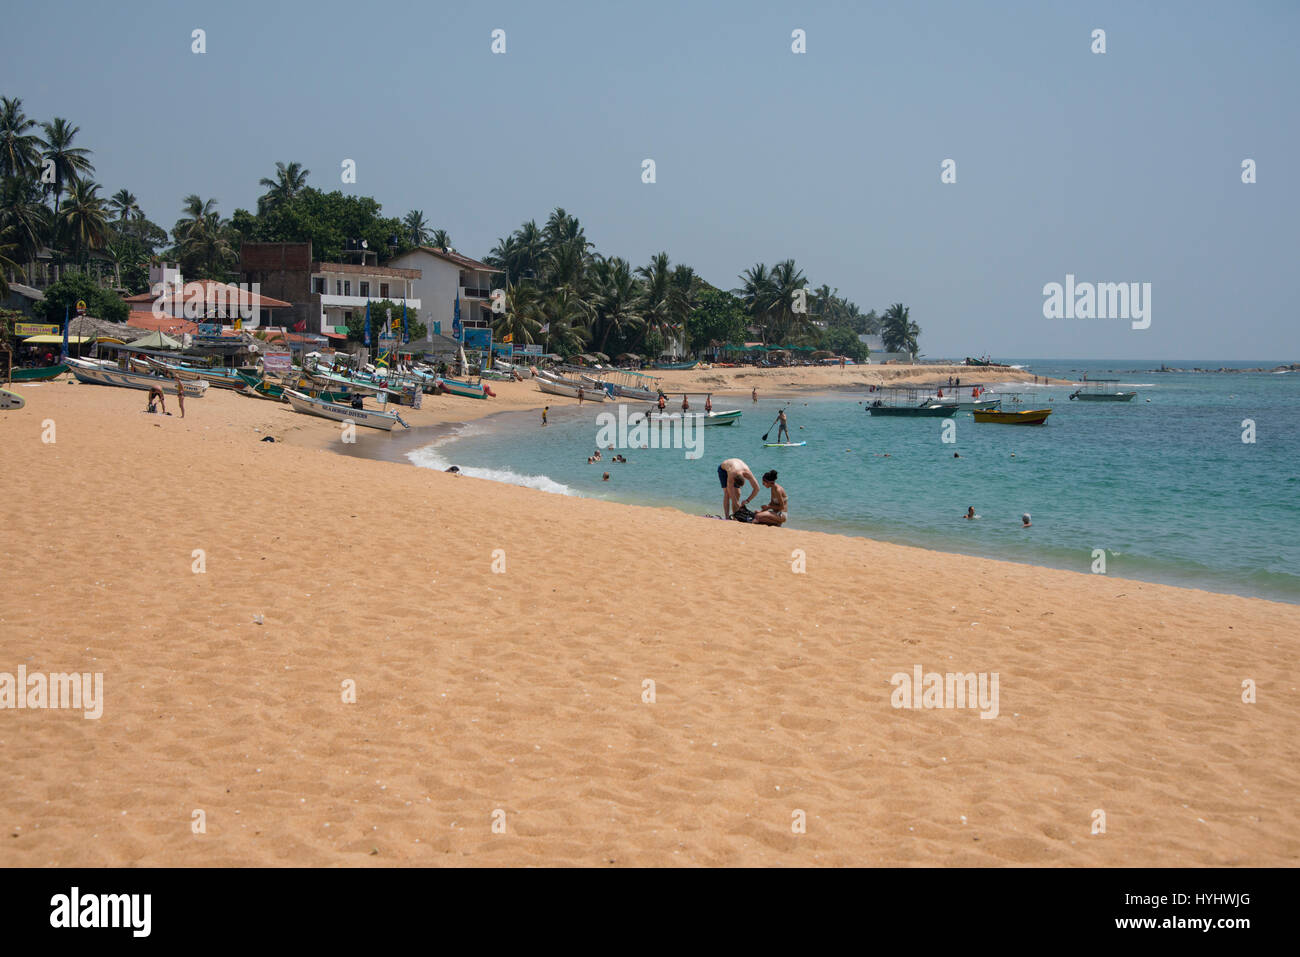 Sri Lanka, near Galle, coastal town of Unawatuna. Calamander Unawatuna Beach, major tourist attraction and top five beaches in Sri Lanka. Stock Photo